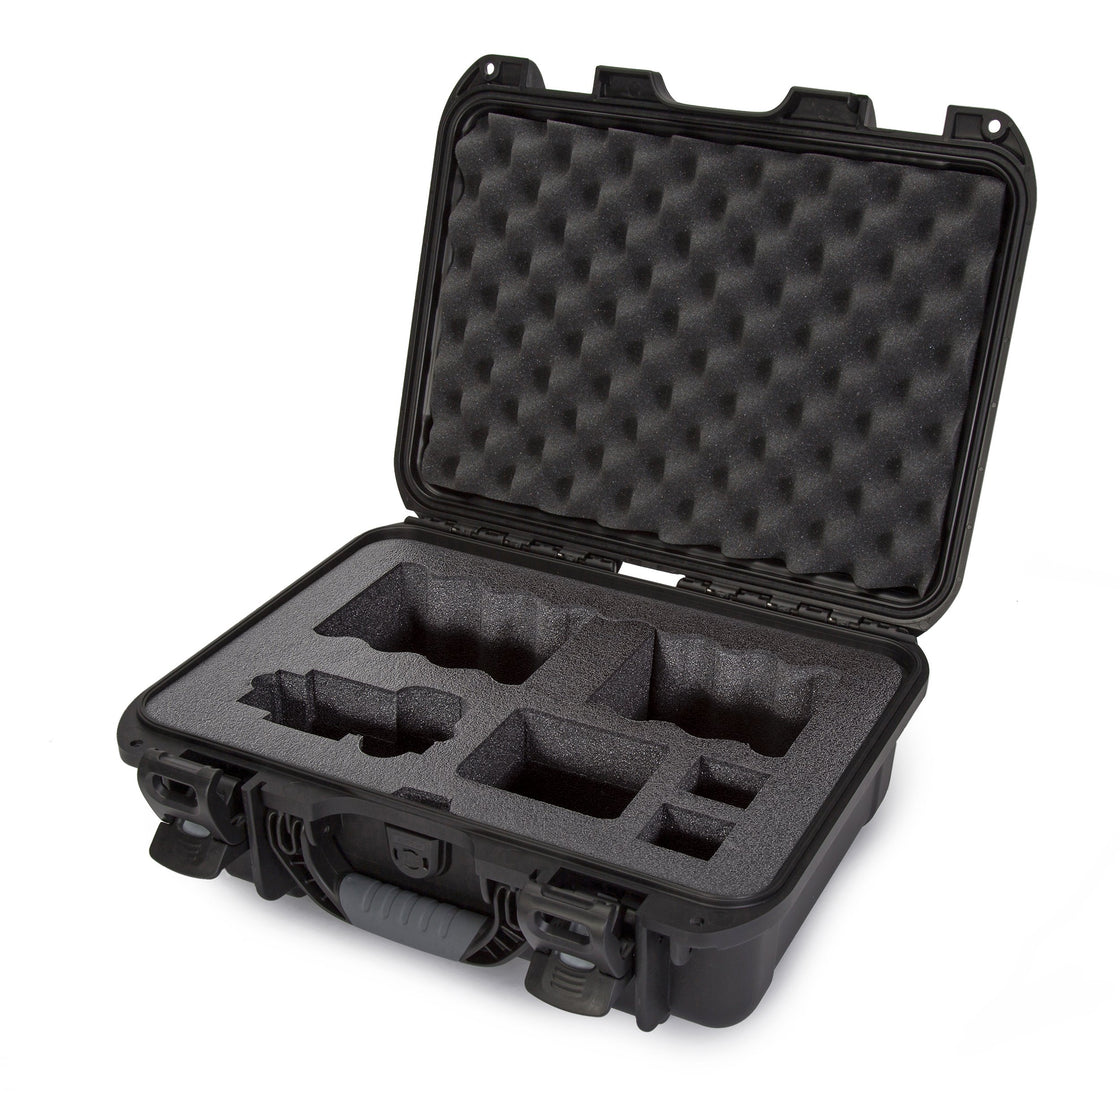 nanuk 918 waterproof hard gun case for revlovers with custom 3up foam insert yellow